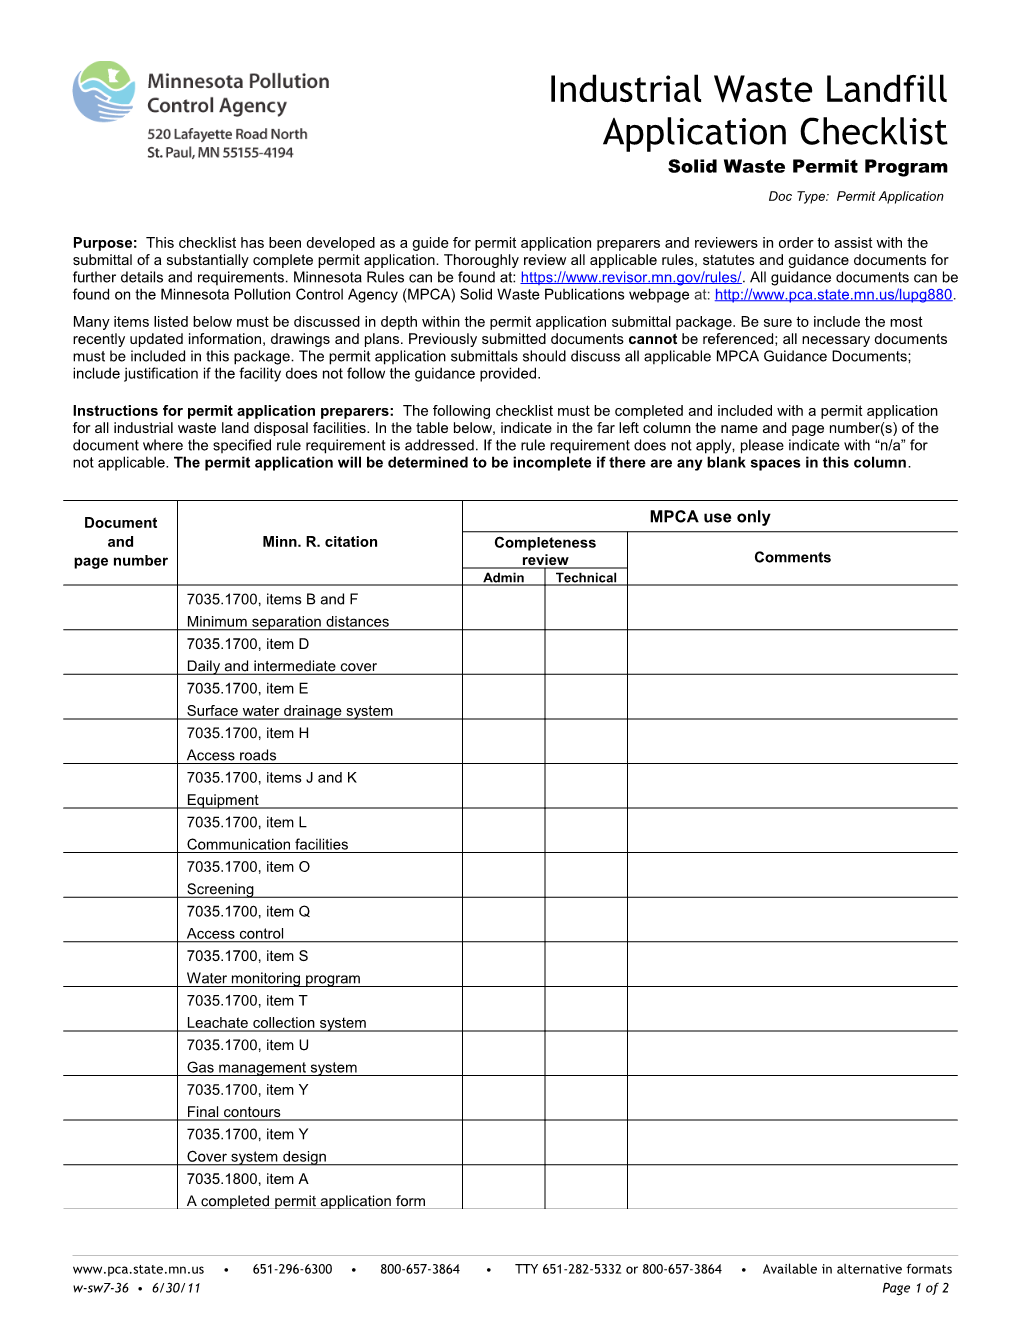 Industrial Waste Landfill Application Checklist - Form